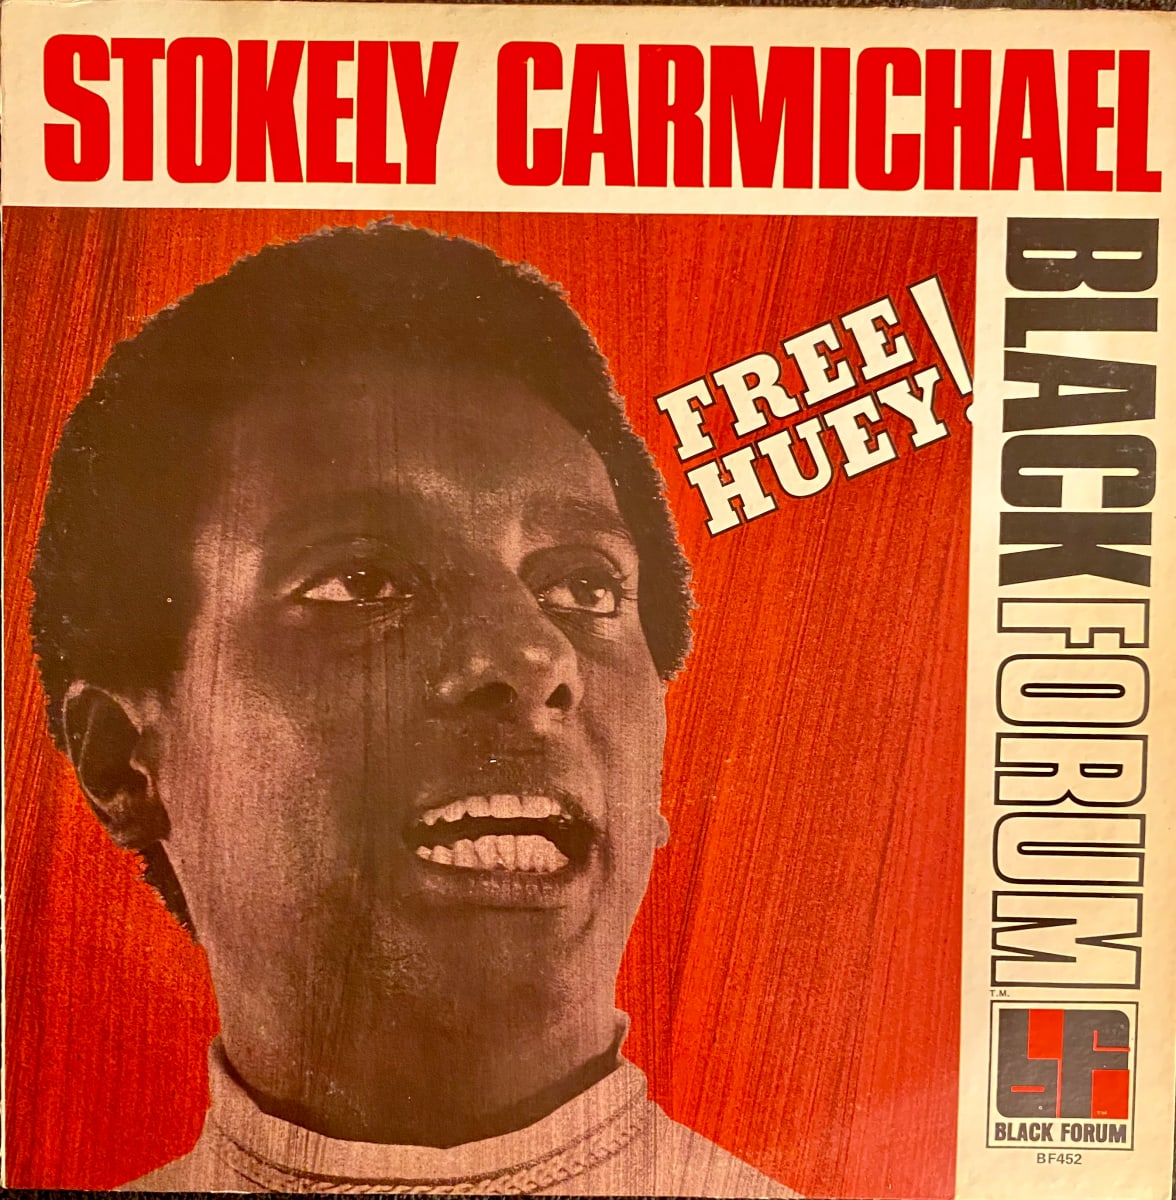 Stokely Carmichael Album "Free Huey" 